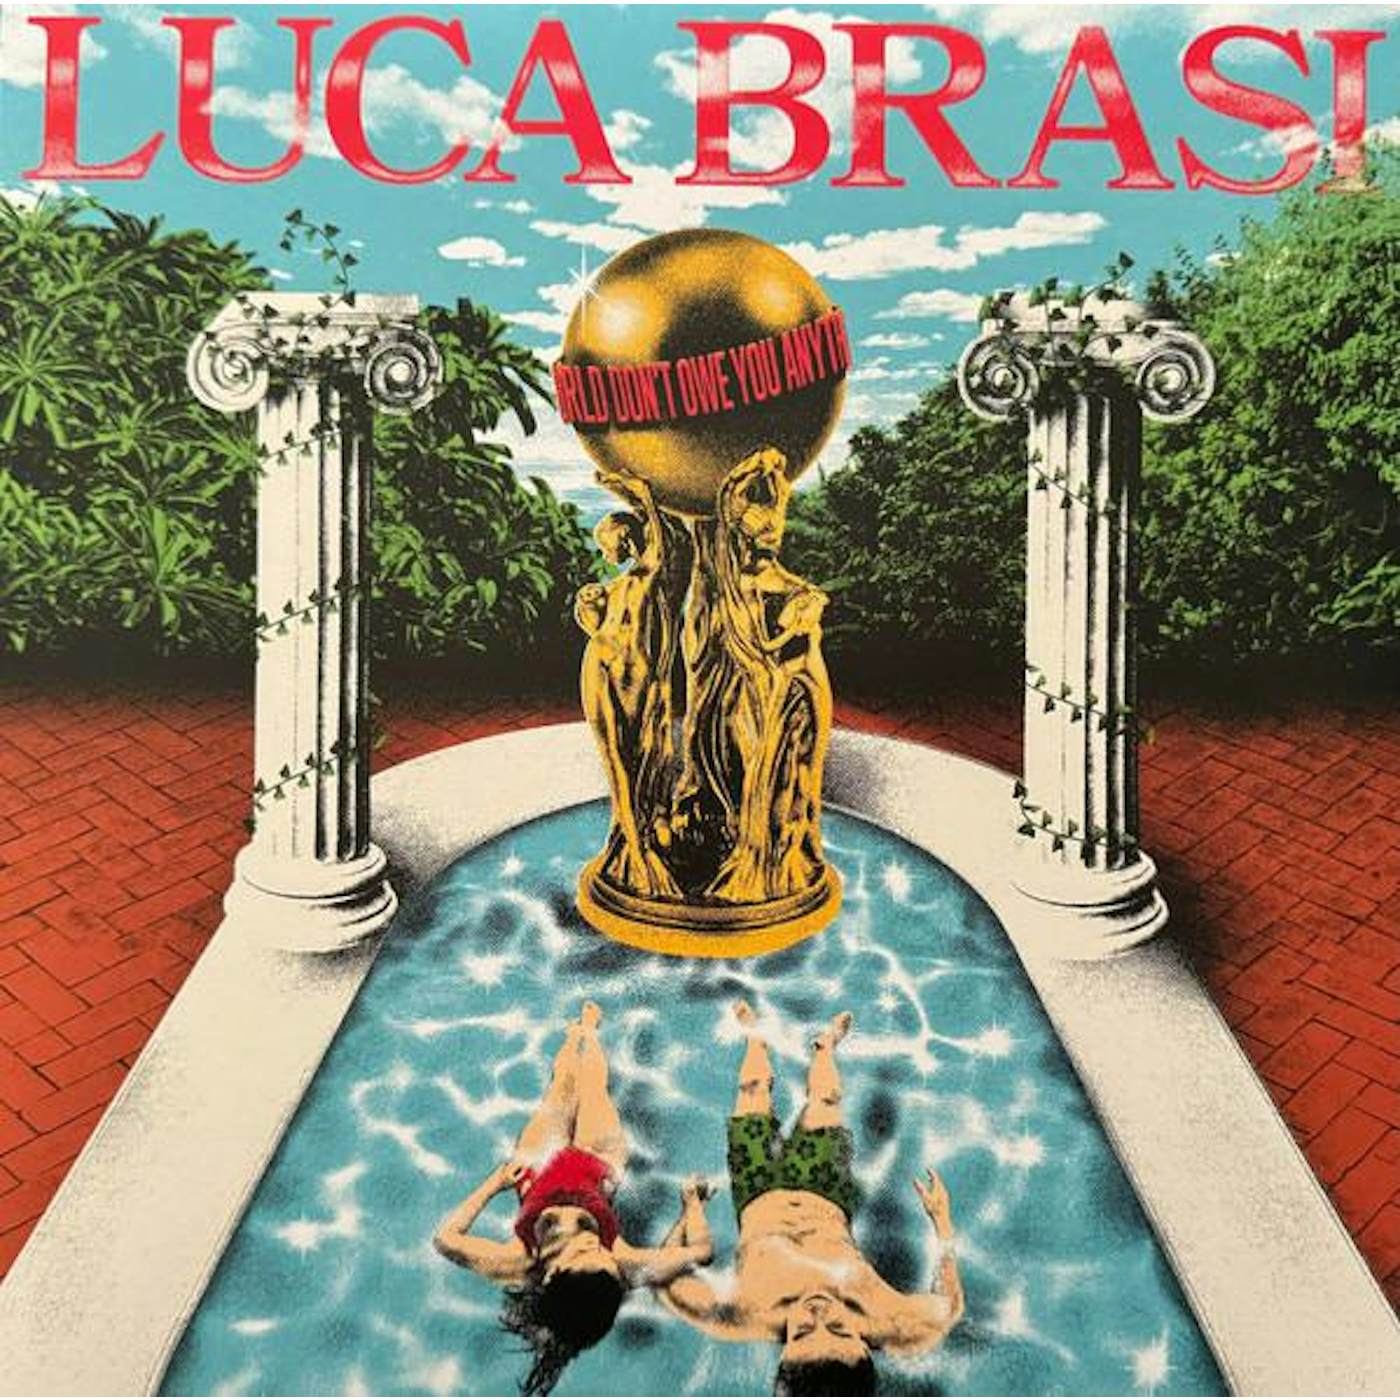 Luca Brasi WORLD DON'T OWE YOU ANYTHING Vinyl Record